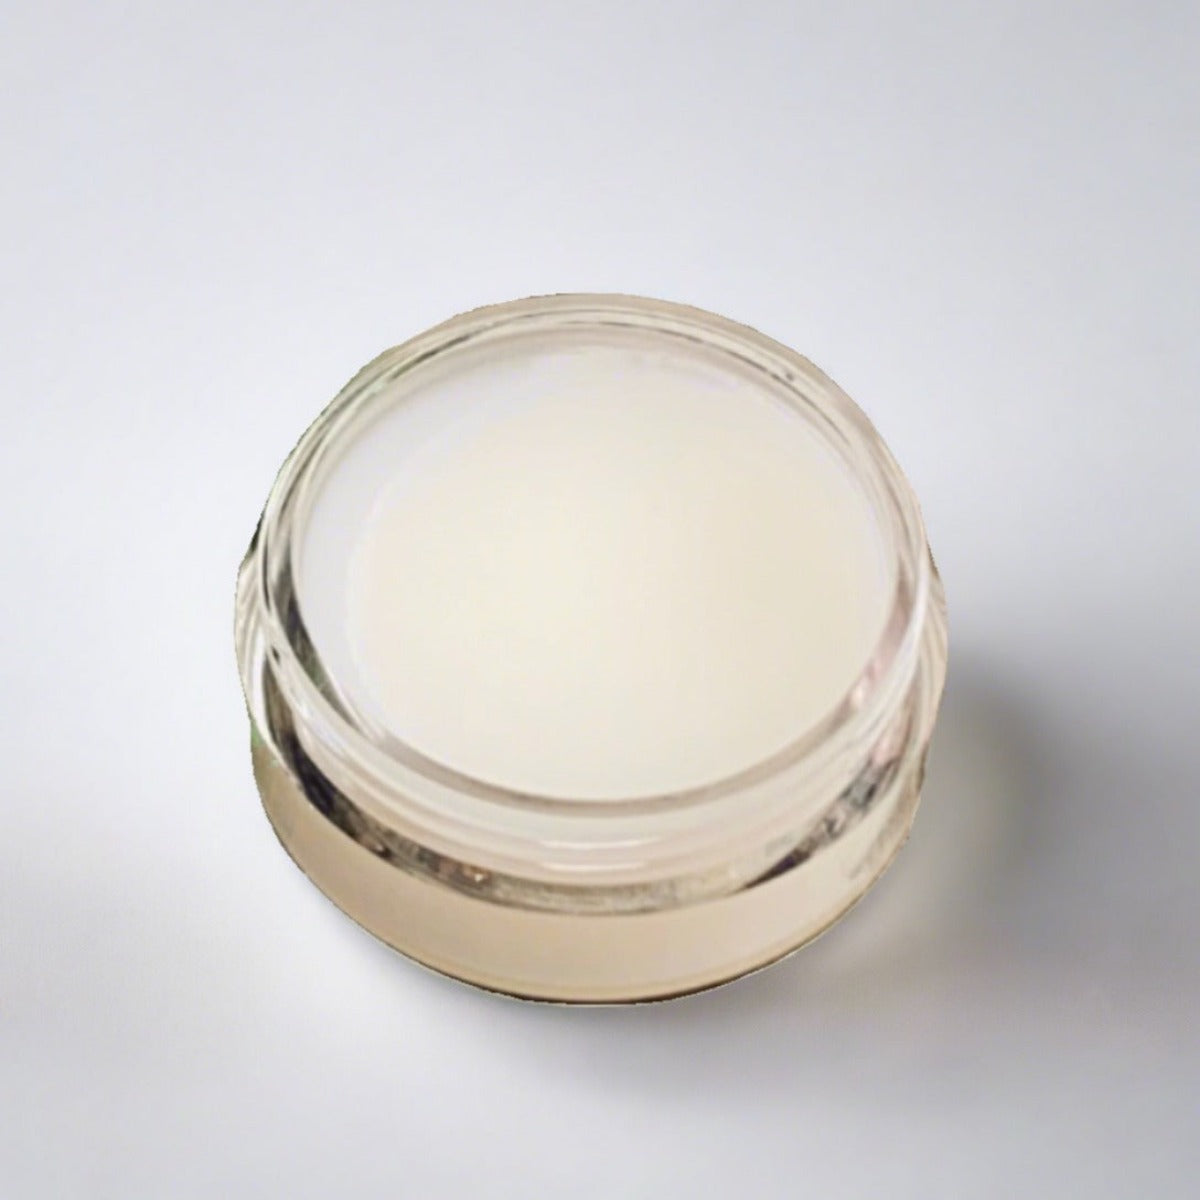 Bioluminescence Argan Eye Balm: A jar of expertly formulated eye balm designed to replenish and moisturize the delicate under-eye area